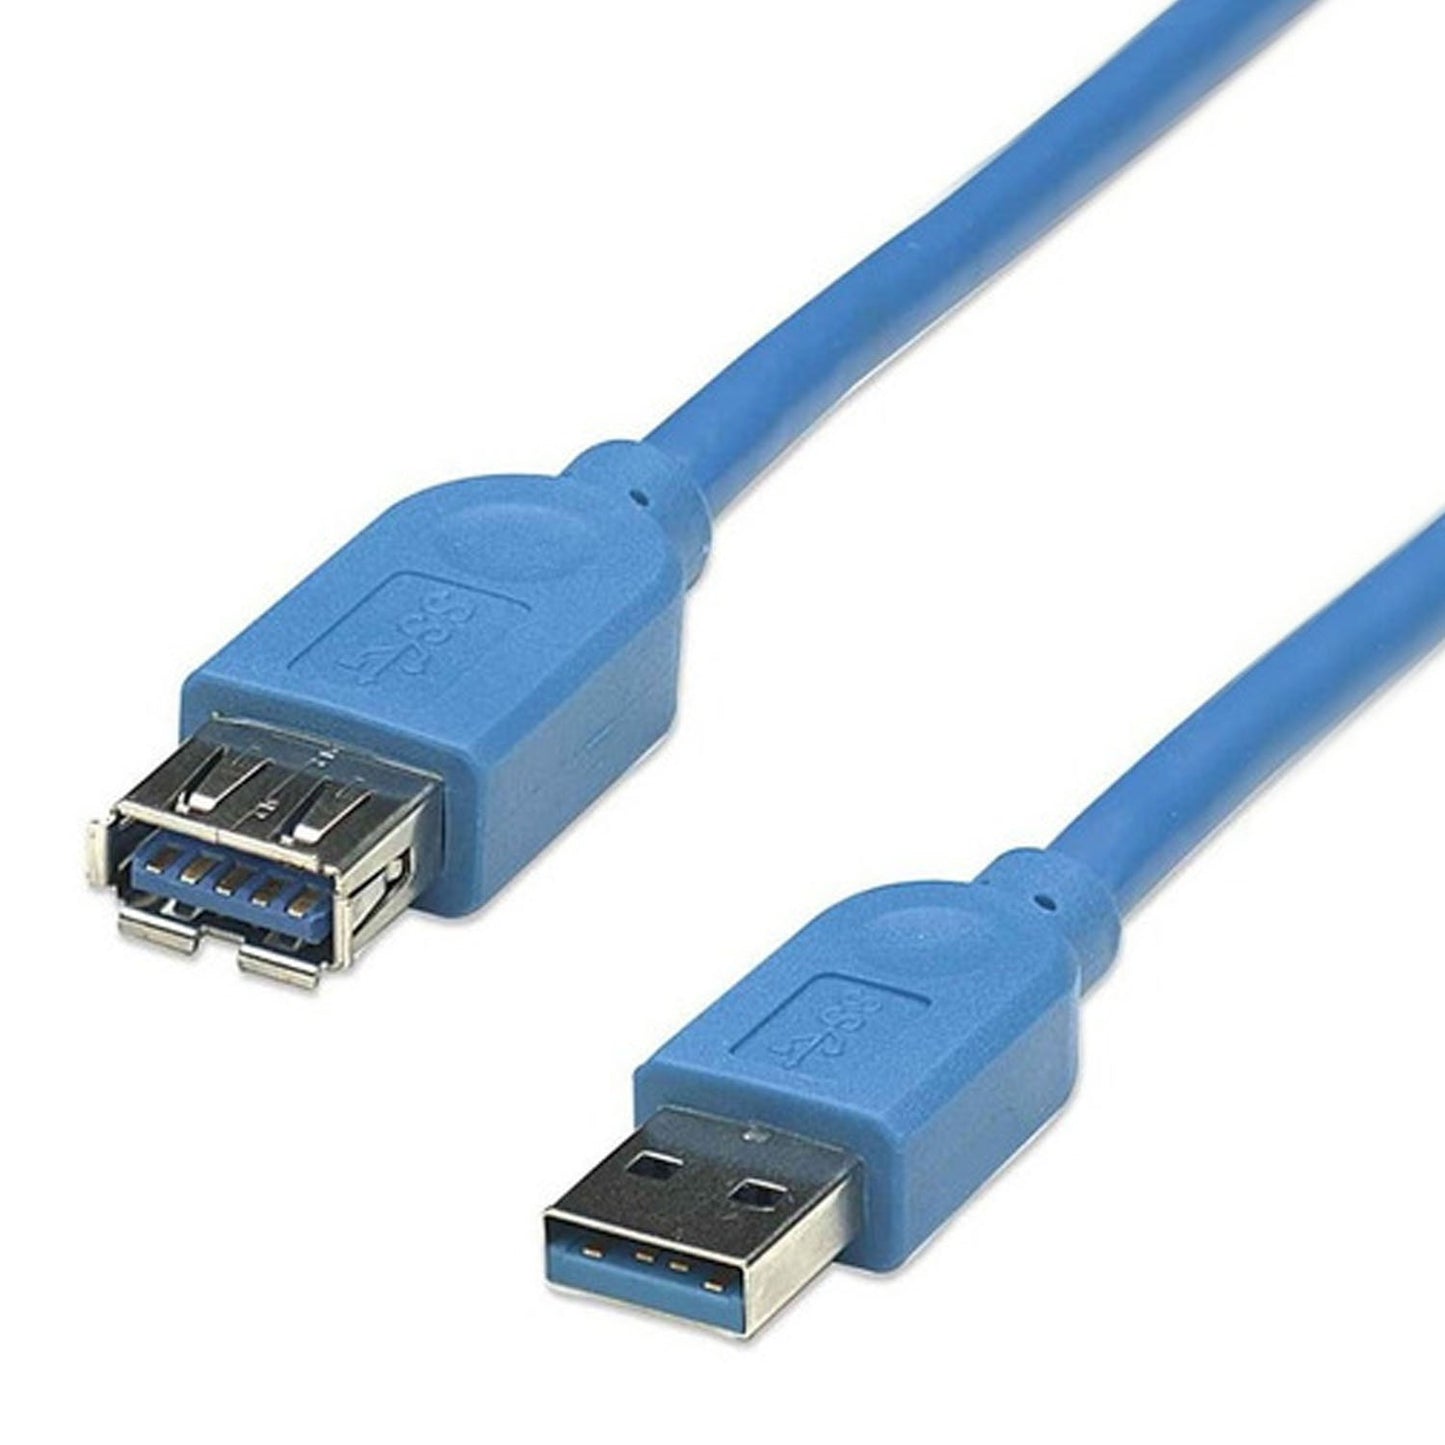 Cable Extencion Usb 3.0 2mts Azul 322379 - Crazygames